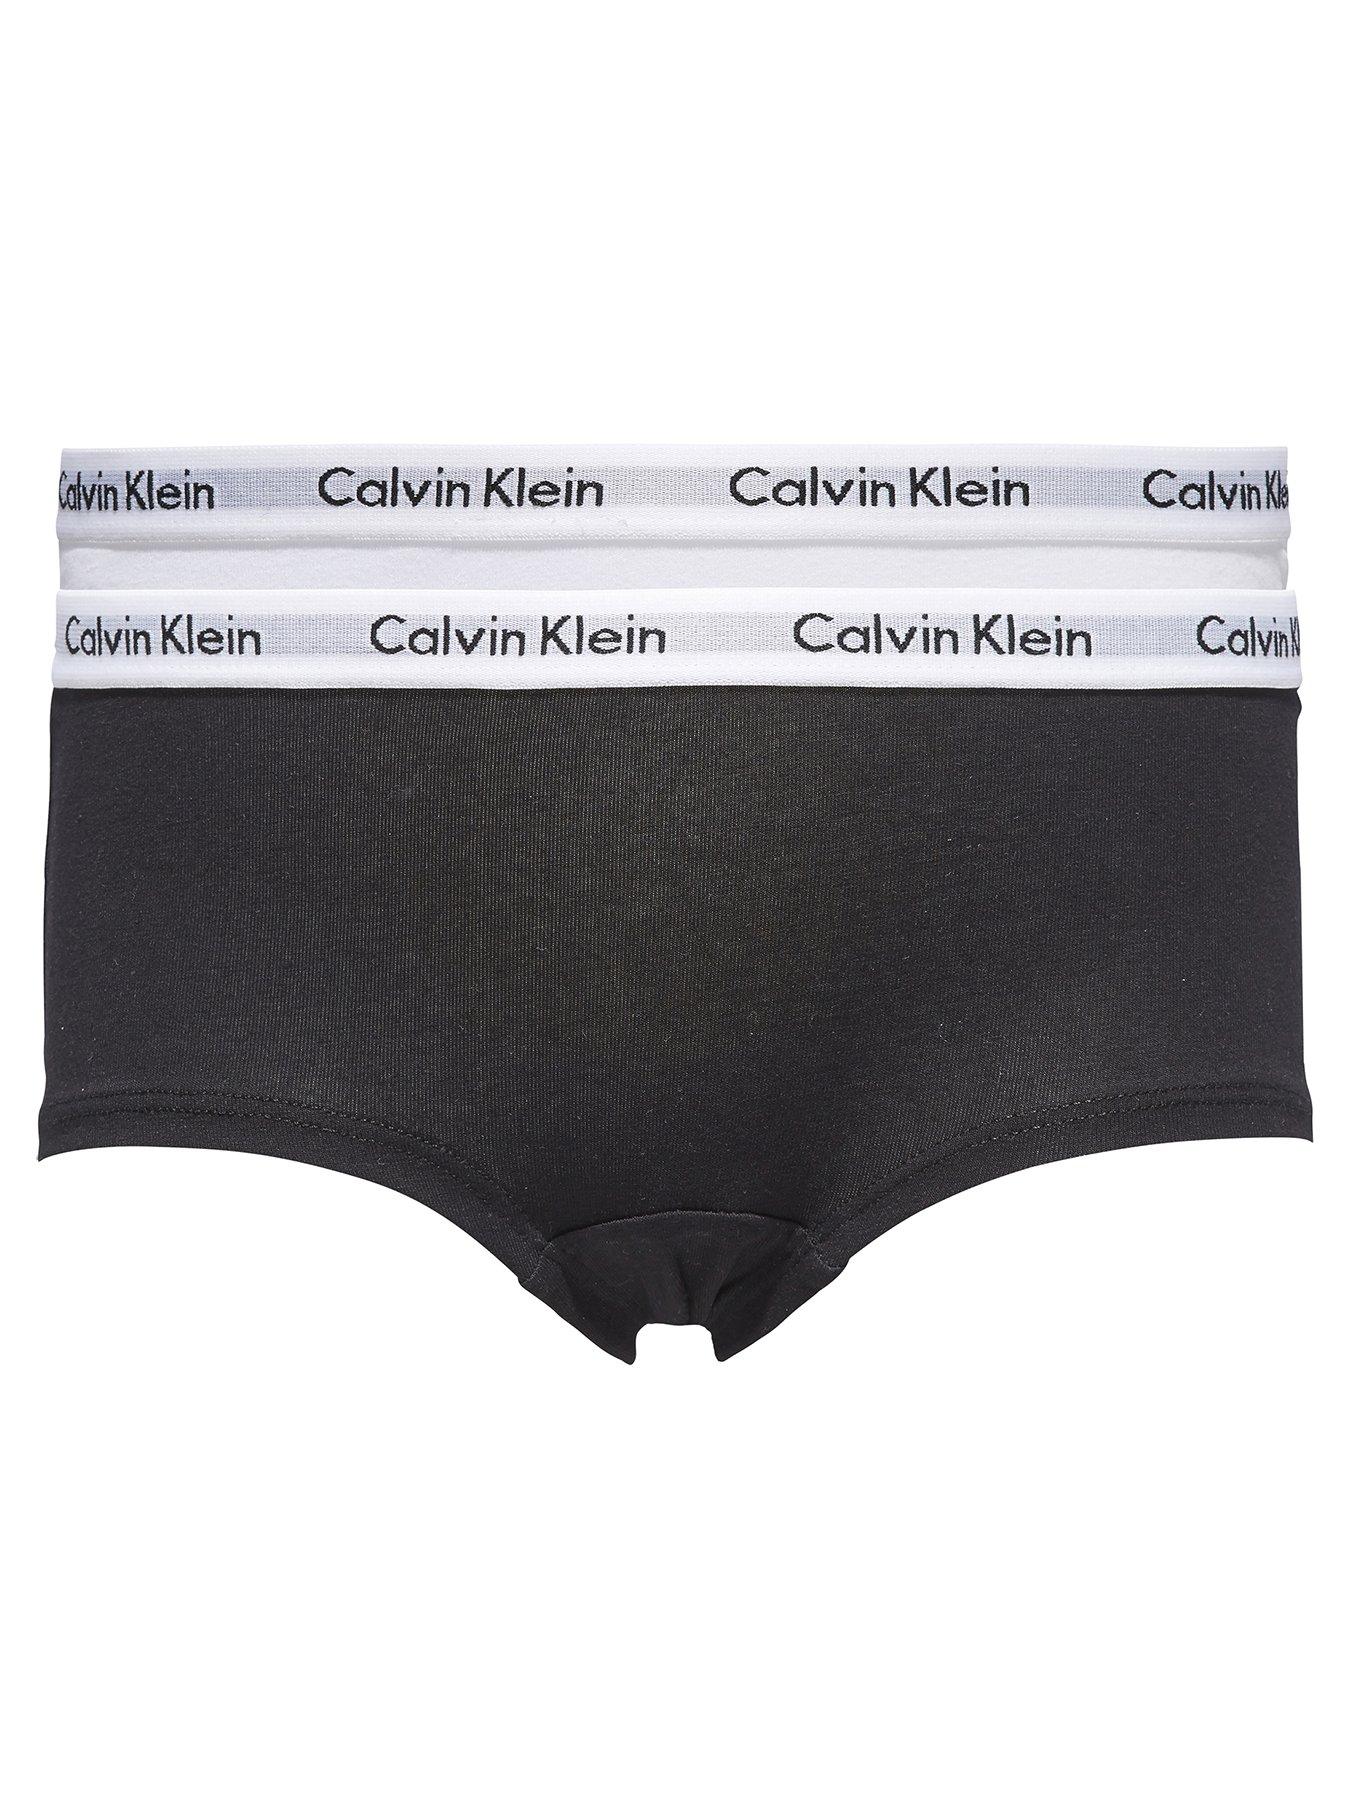 Calvin Klein Girls Black Bikini Brief (2 Pack)